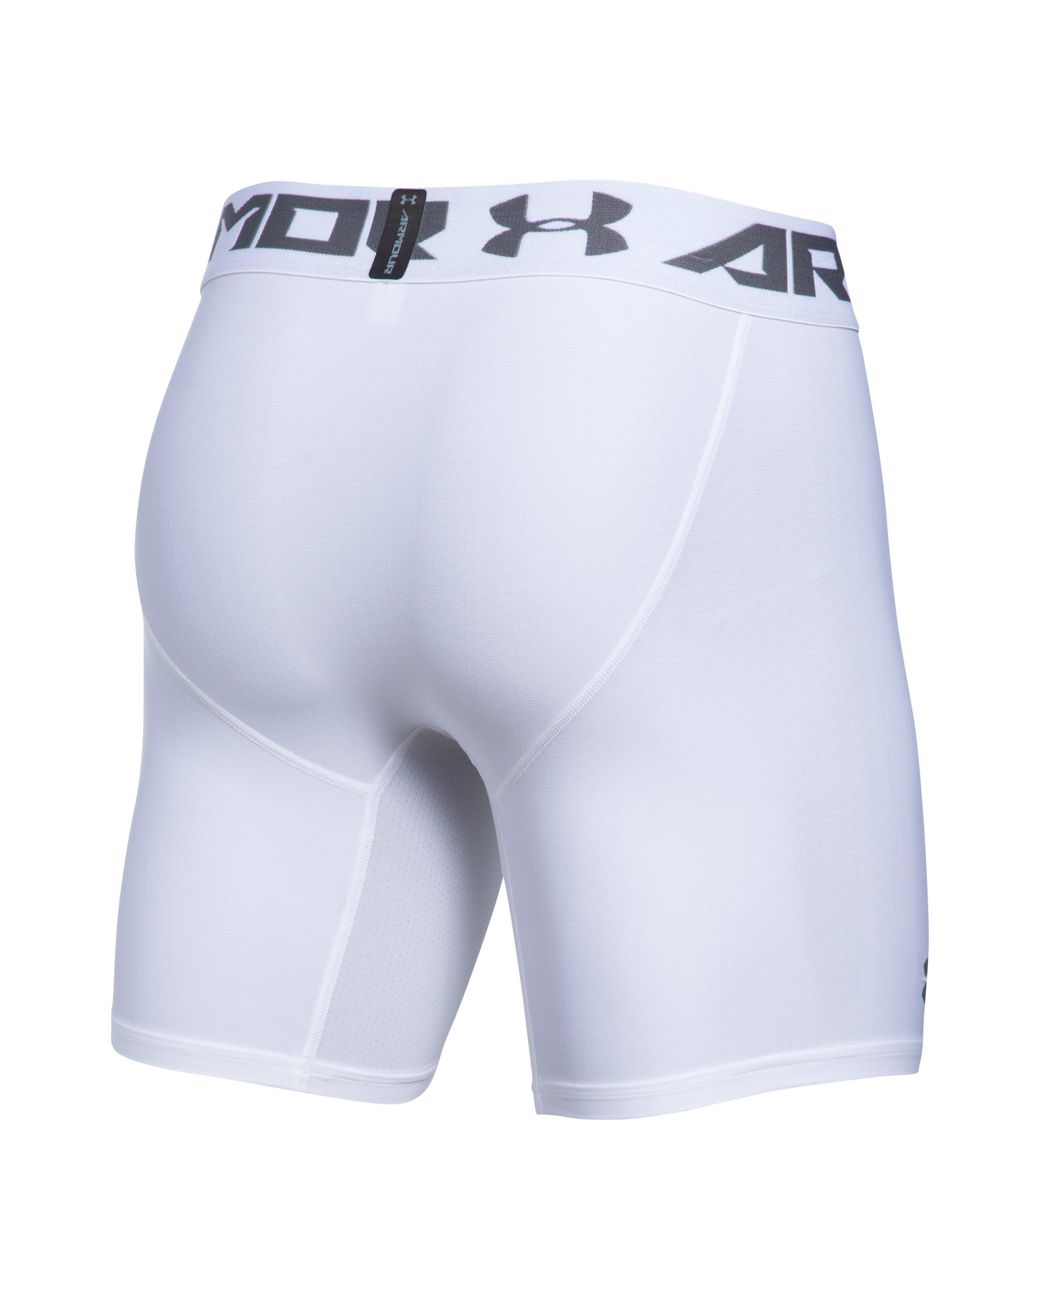 Under Armour White Men's Heatgear® Armor Compression Shorts